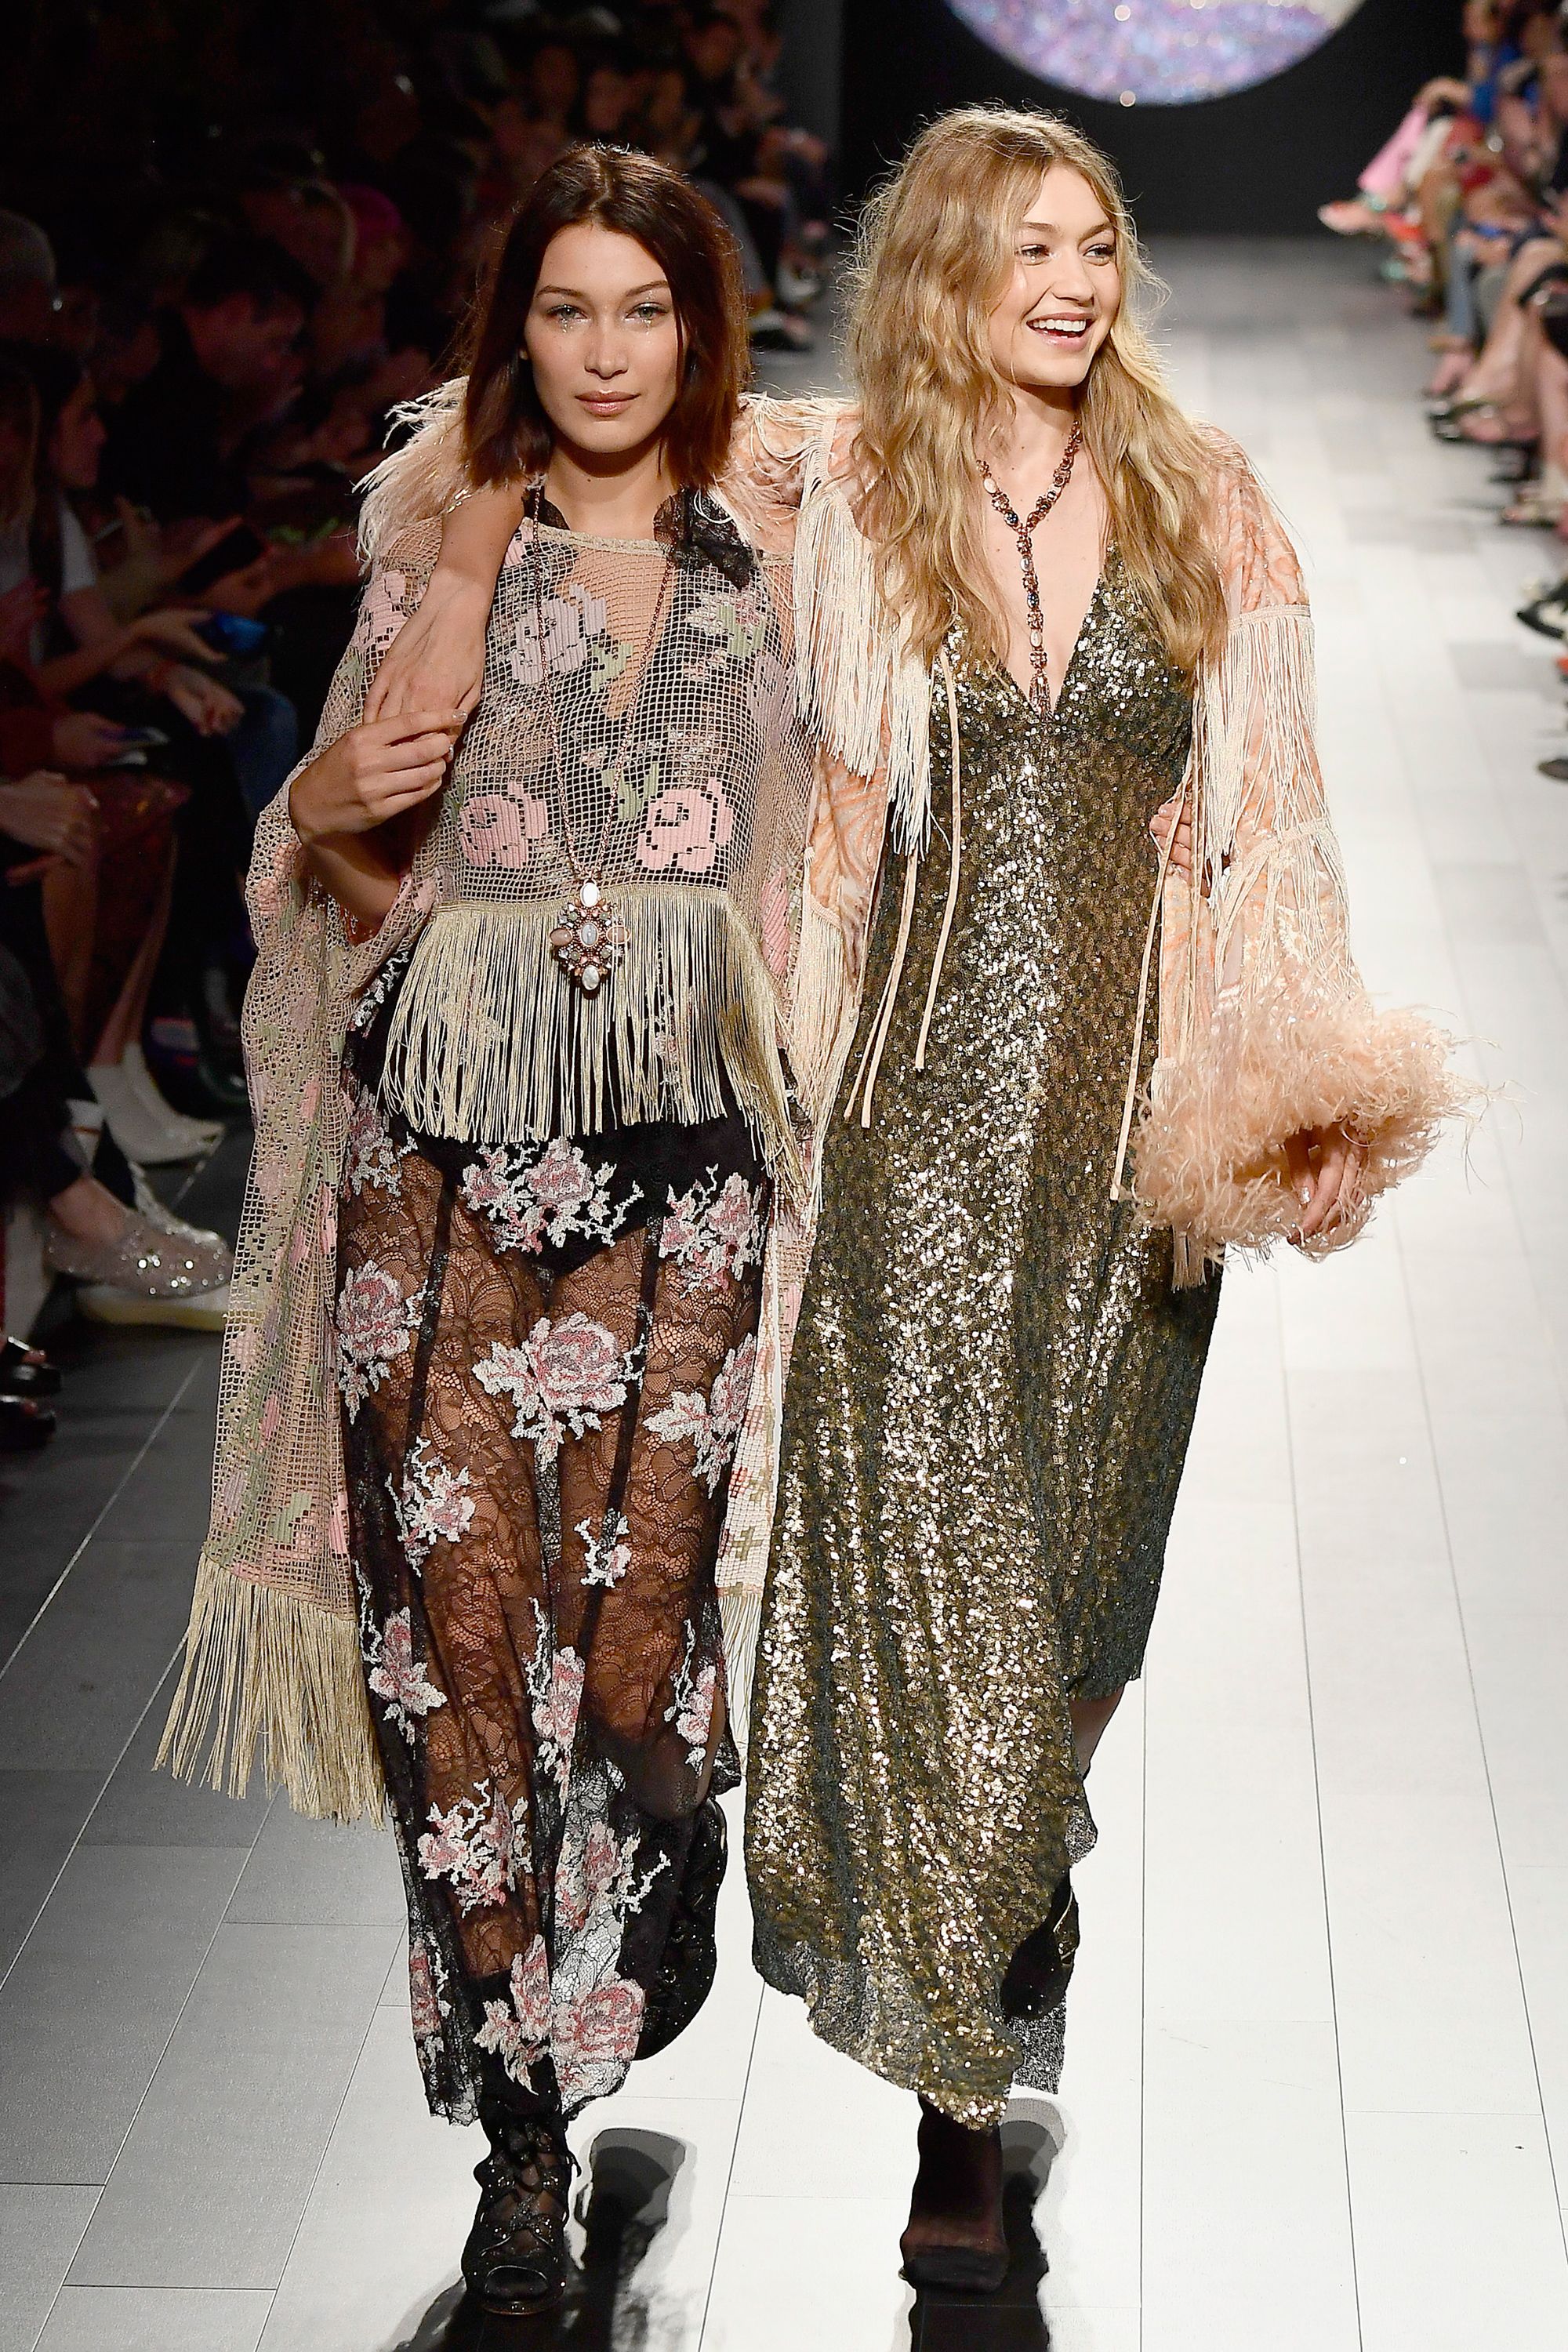 Bella and Gigi Hadid on the catwalk